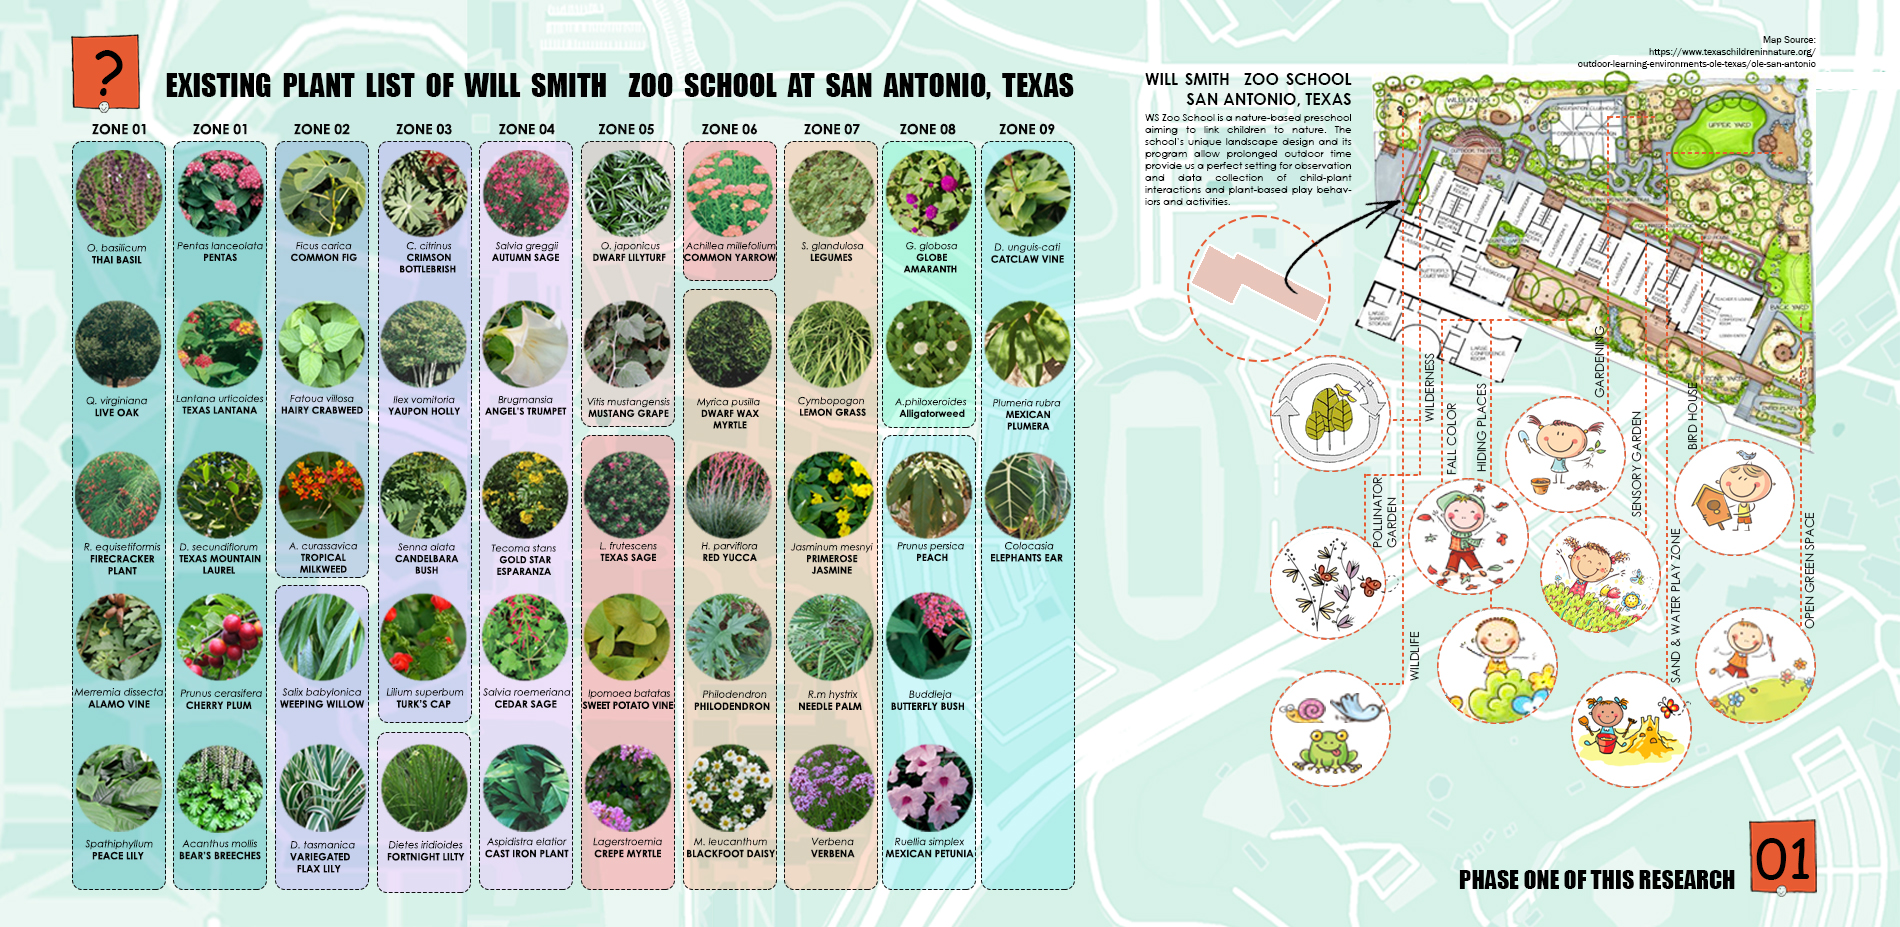 Case study of Will Smith Zoo School, San Antonio, Texas